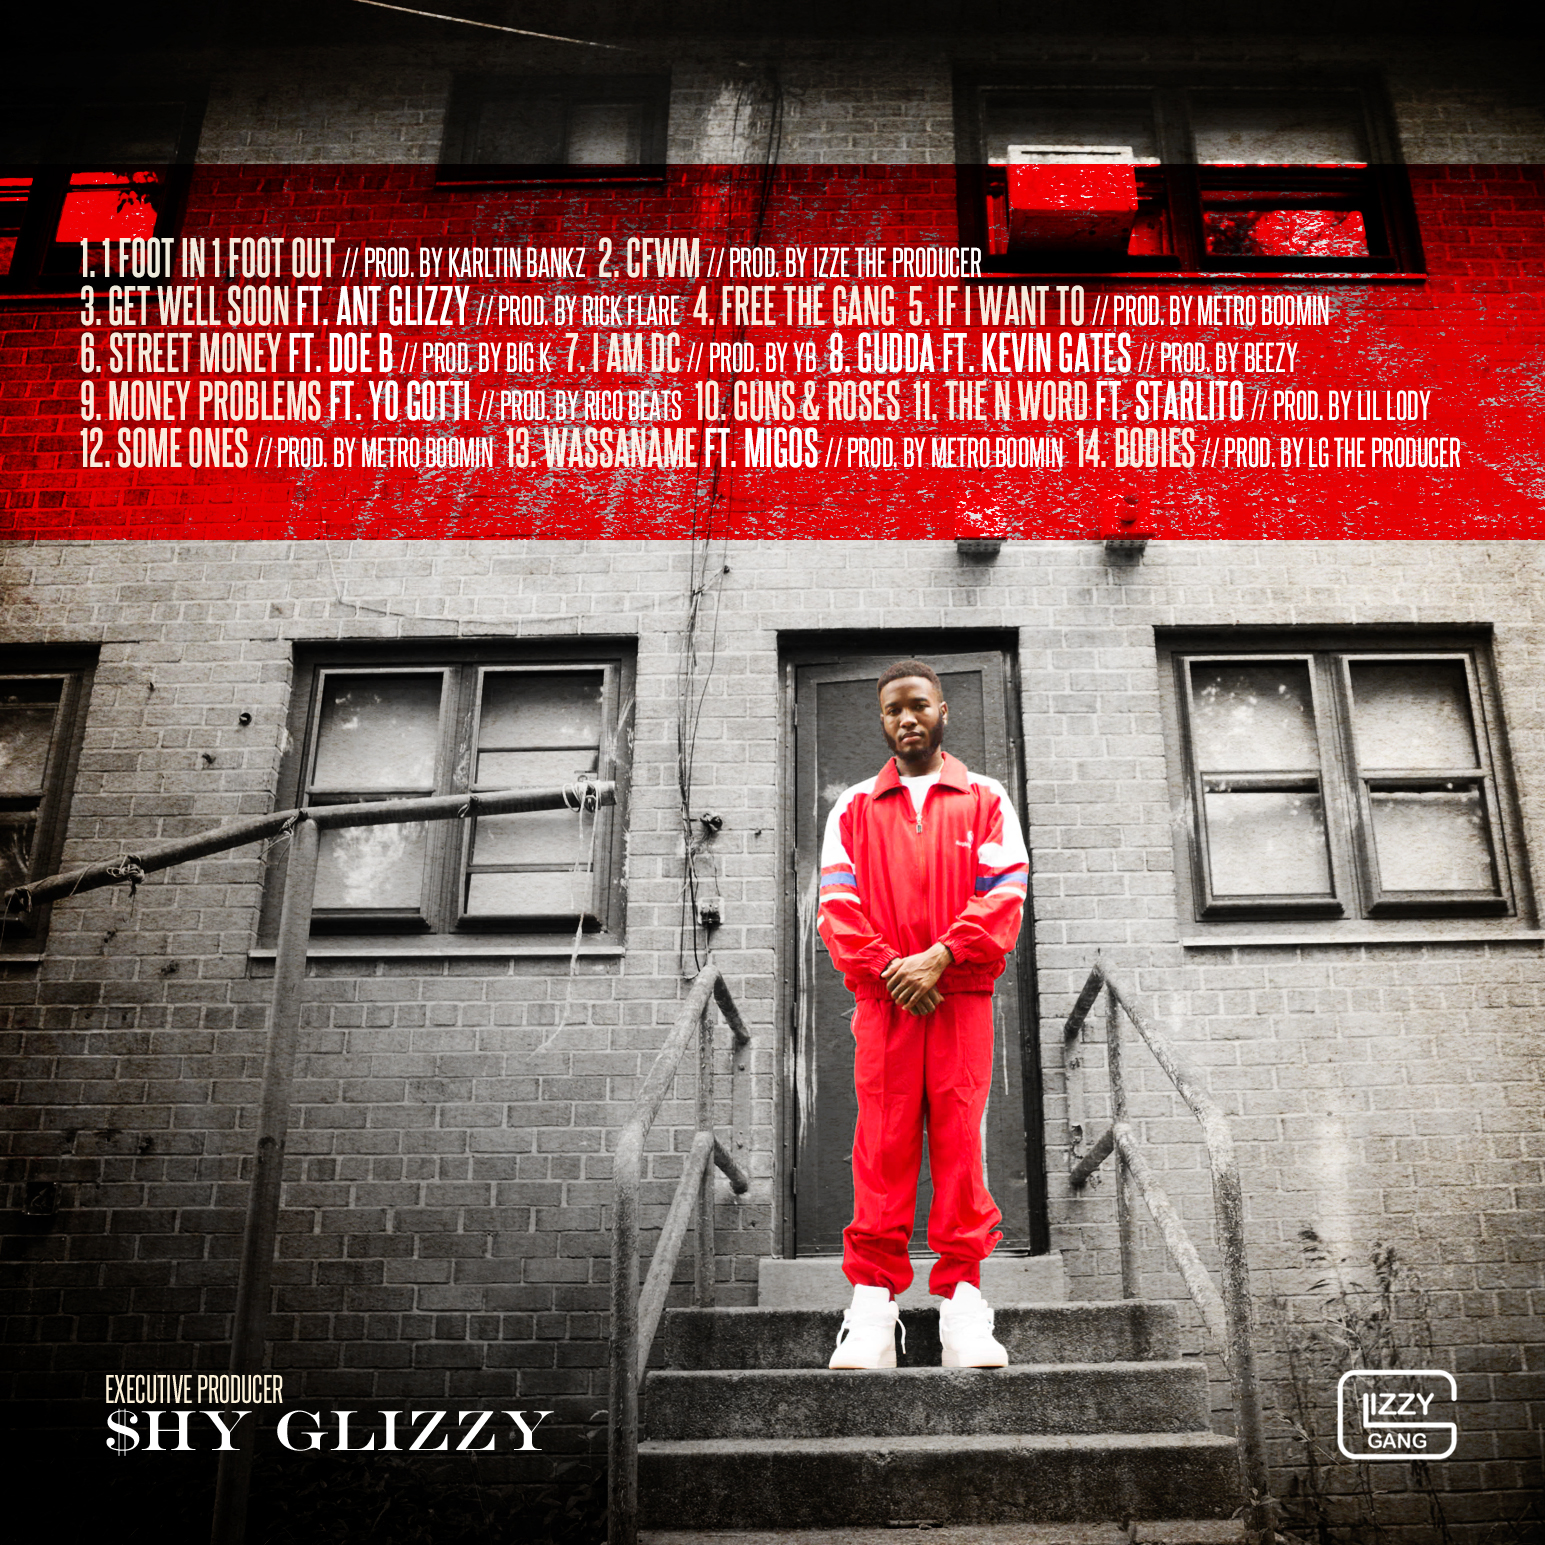 shy-glizzy-law-2-mixtape-tracklist-HHS1987-2013 Shy Glizzy - Law 2 (Mixtape Tracklist)  